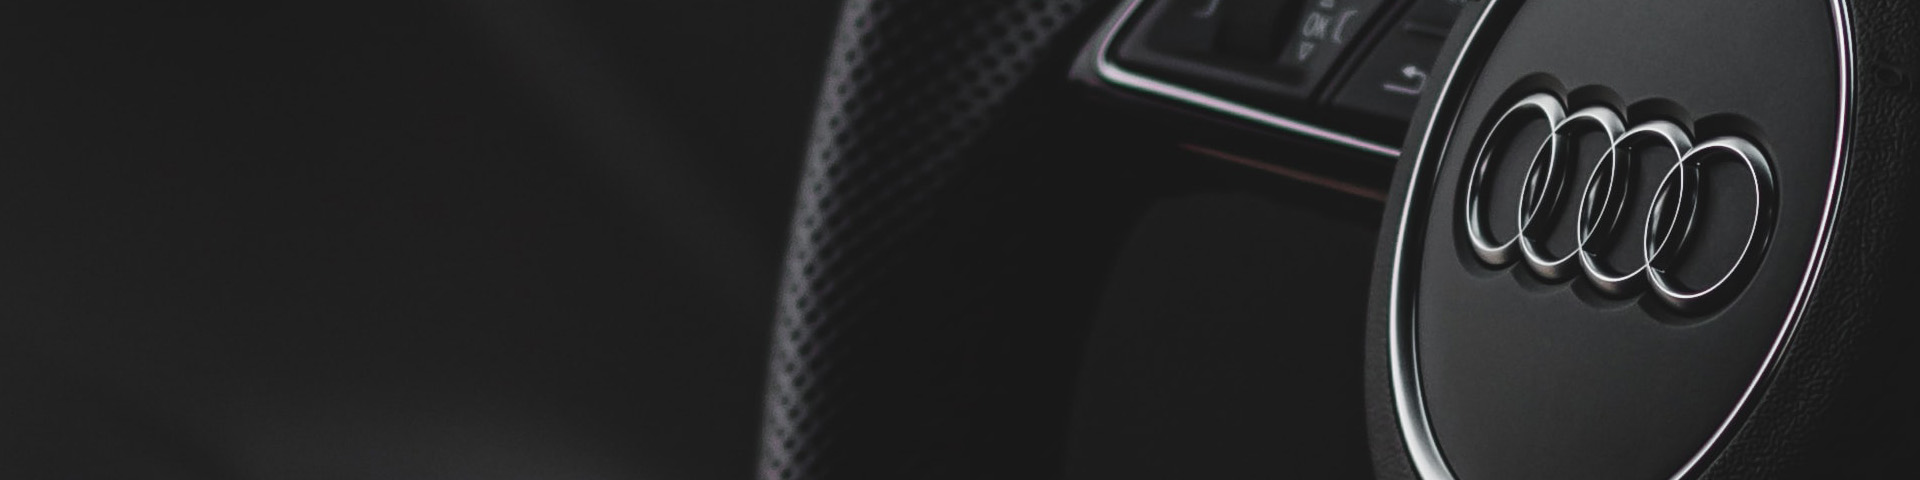 Audi Q4 Backdrop